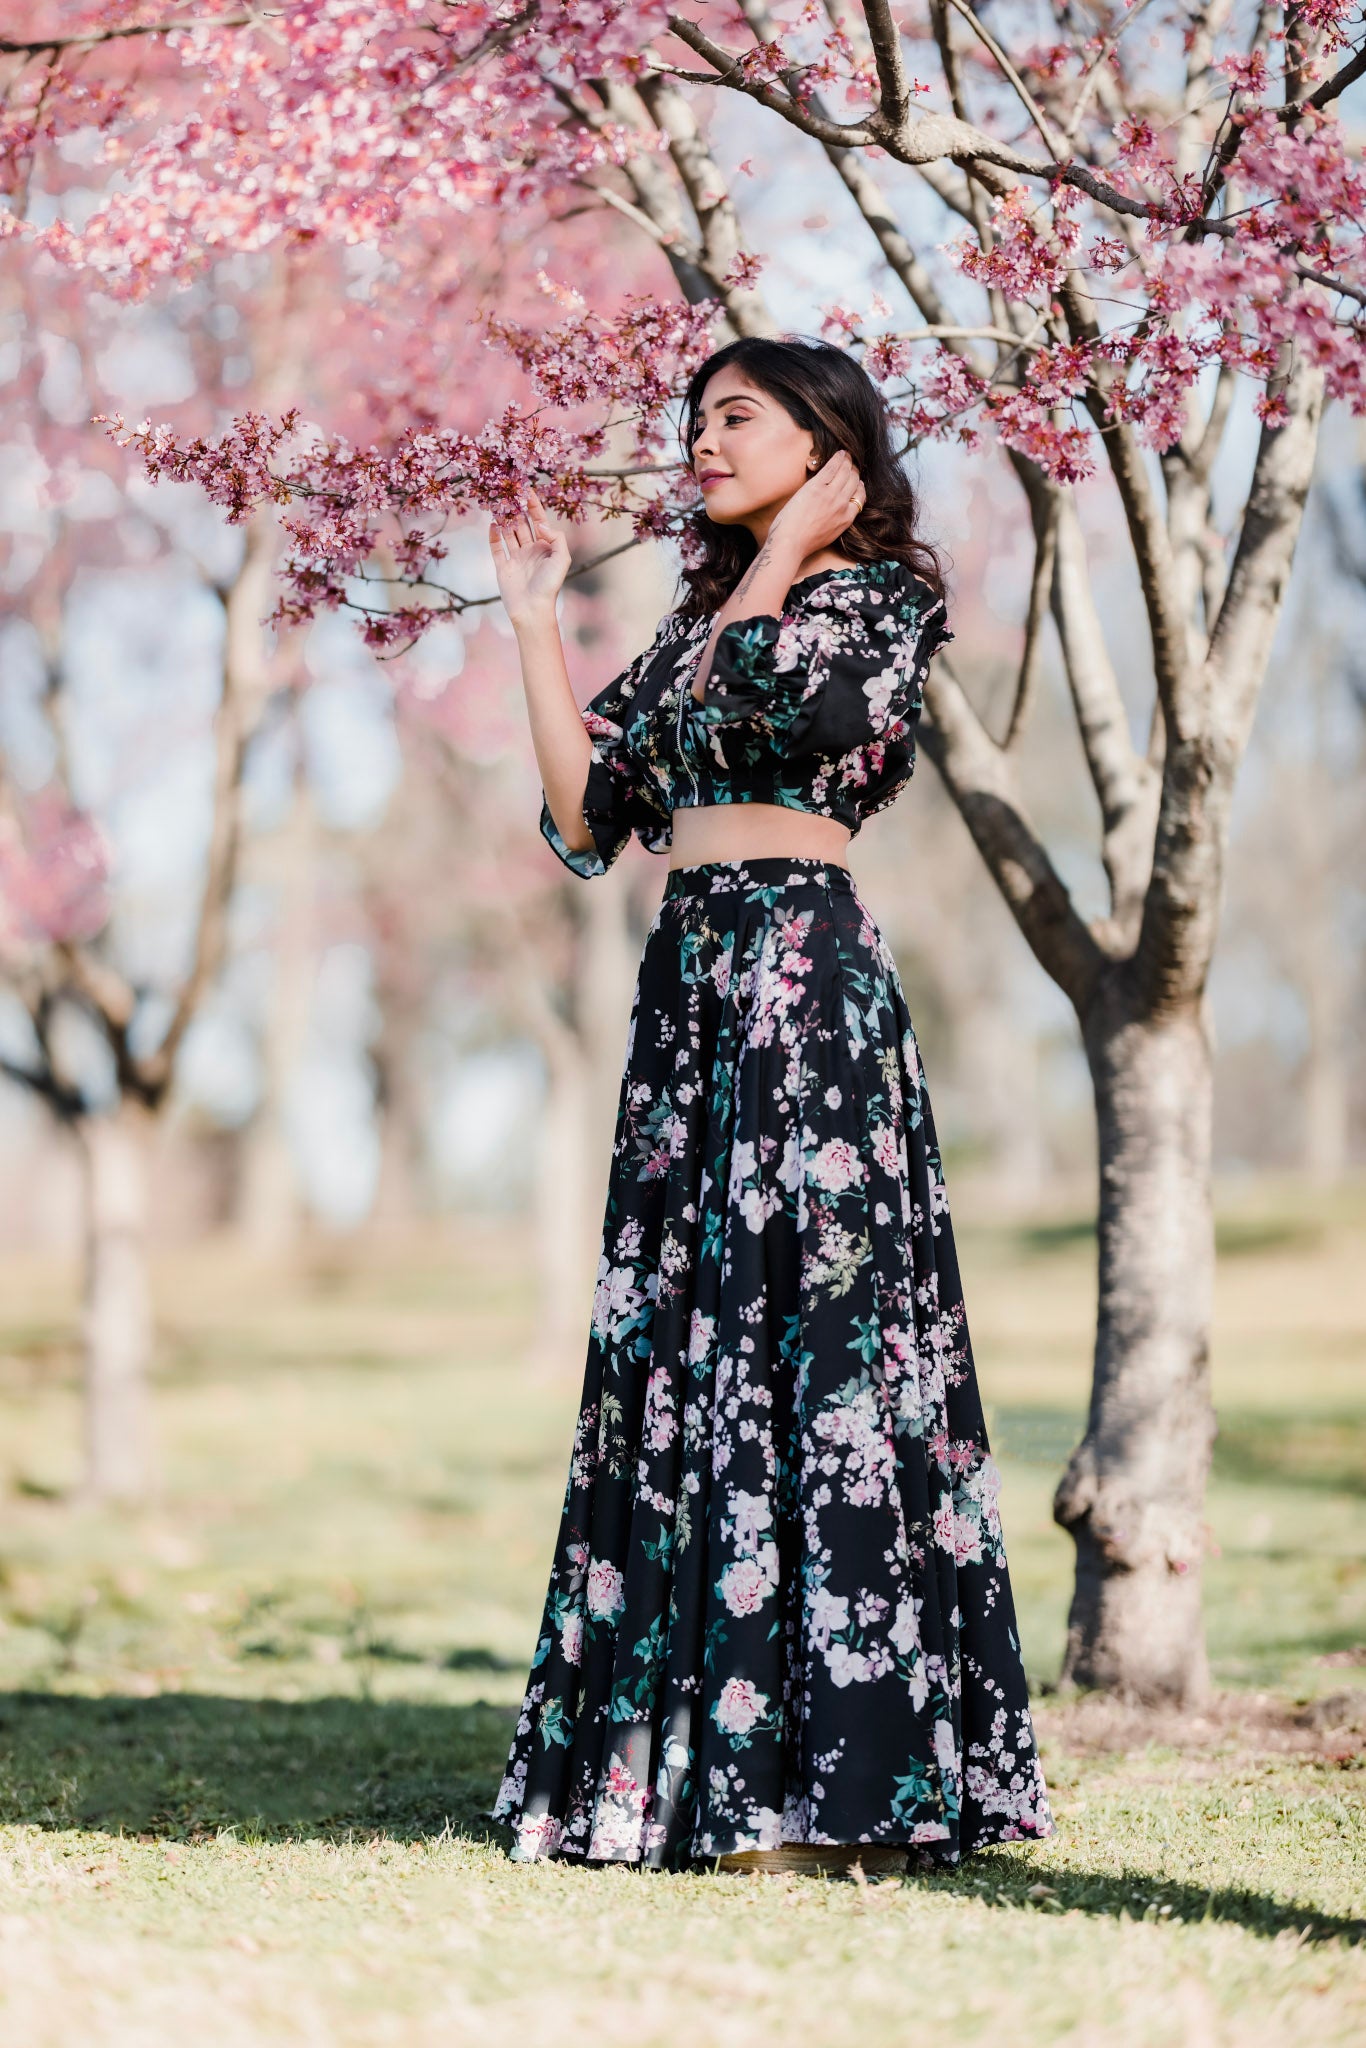 Shital Patel in the Amira Black Floral Blossom Lehenga Skirt - Harleen Kaur Indowestern Wear - Made in New York City